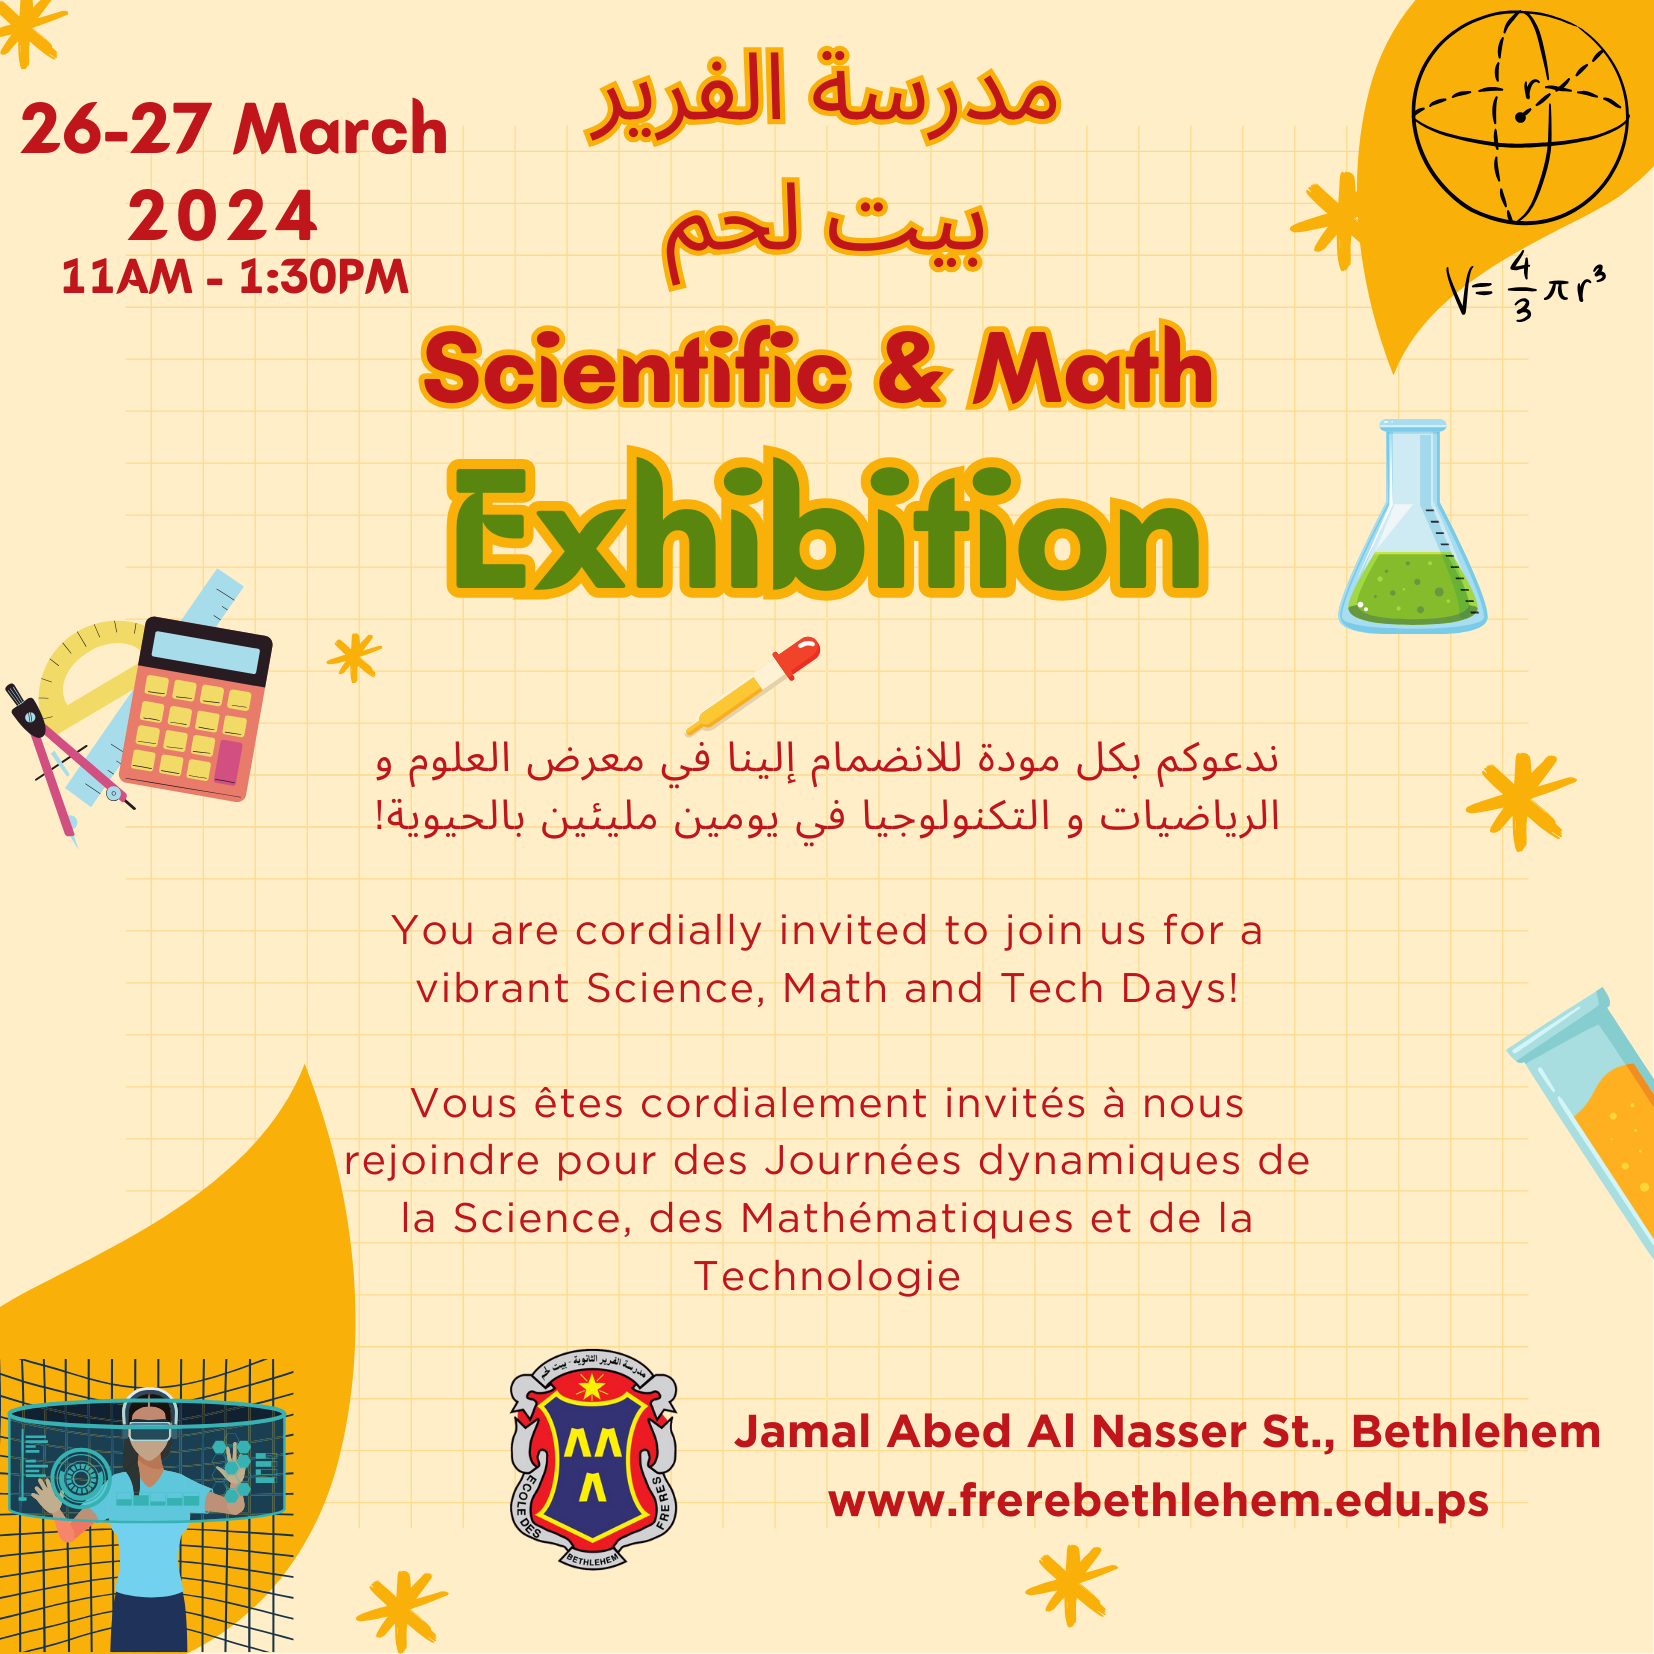 Scientific & Math Exhibition